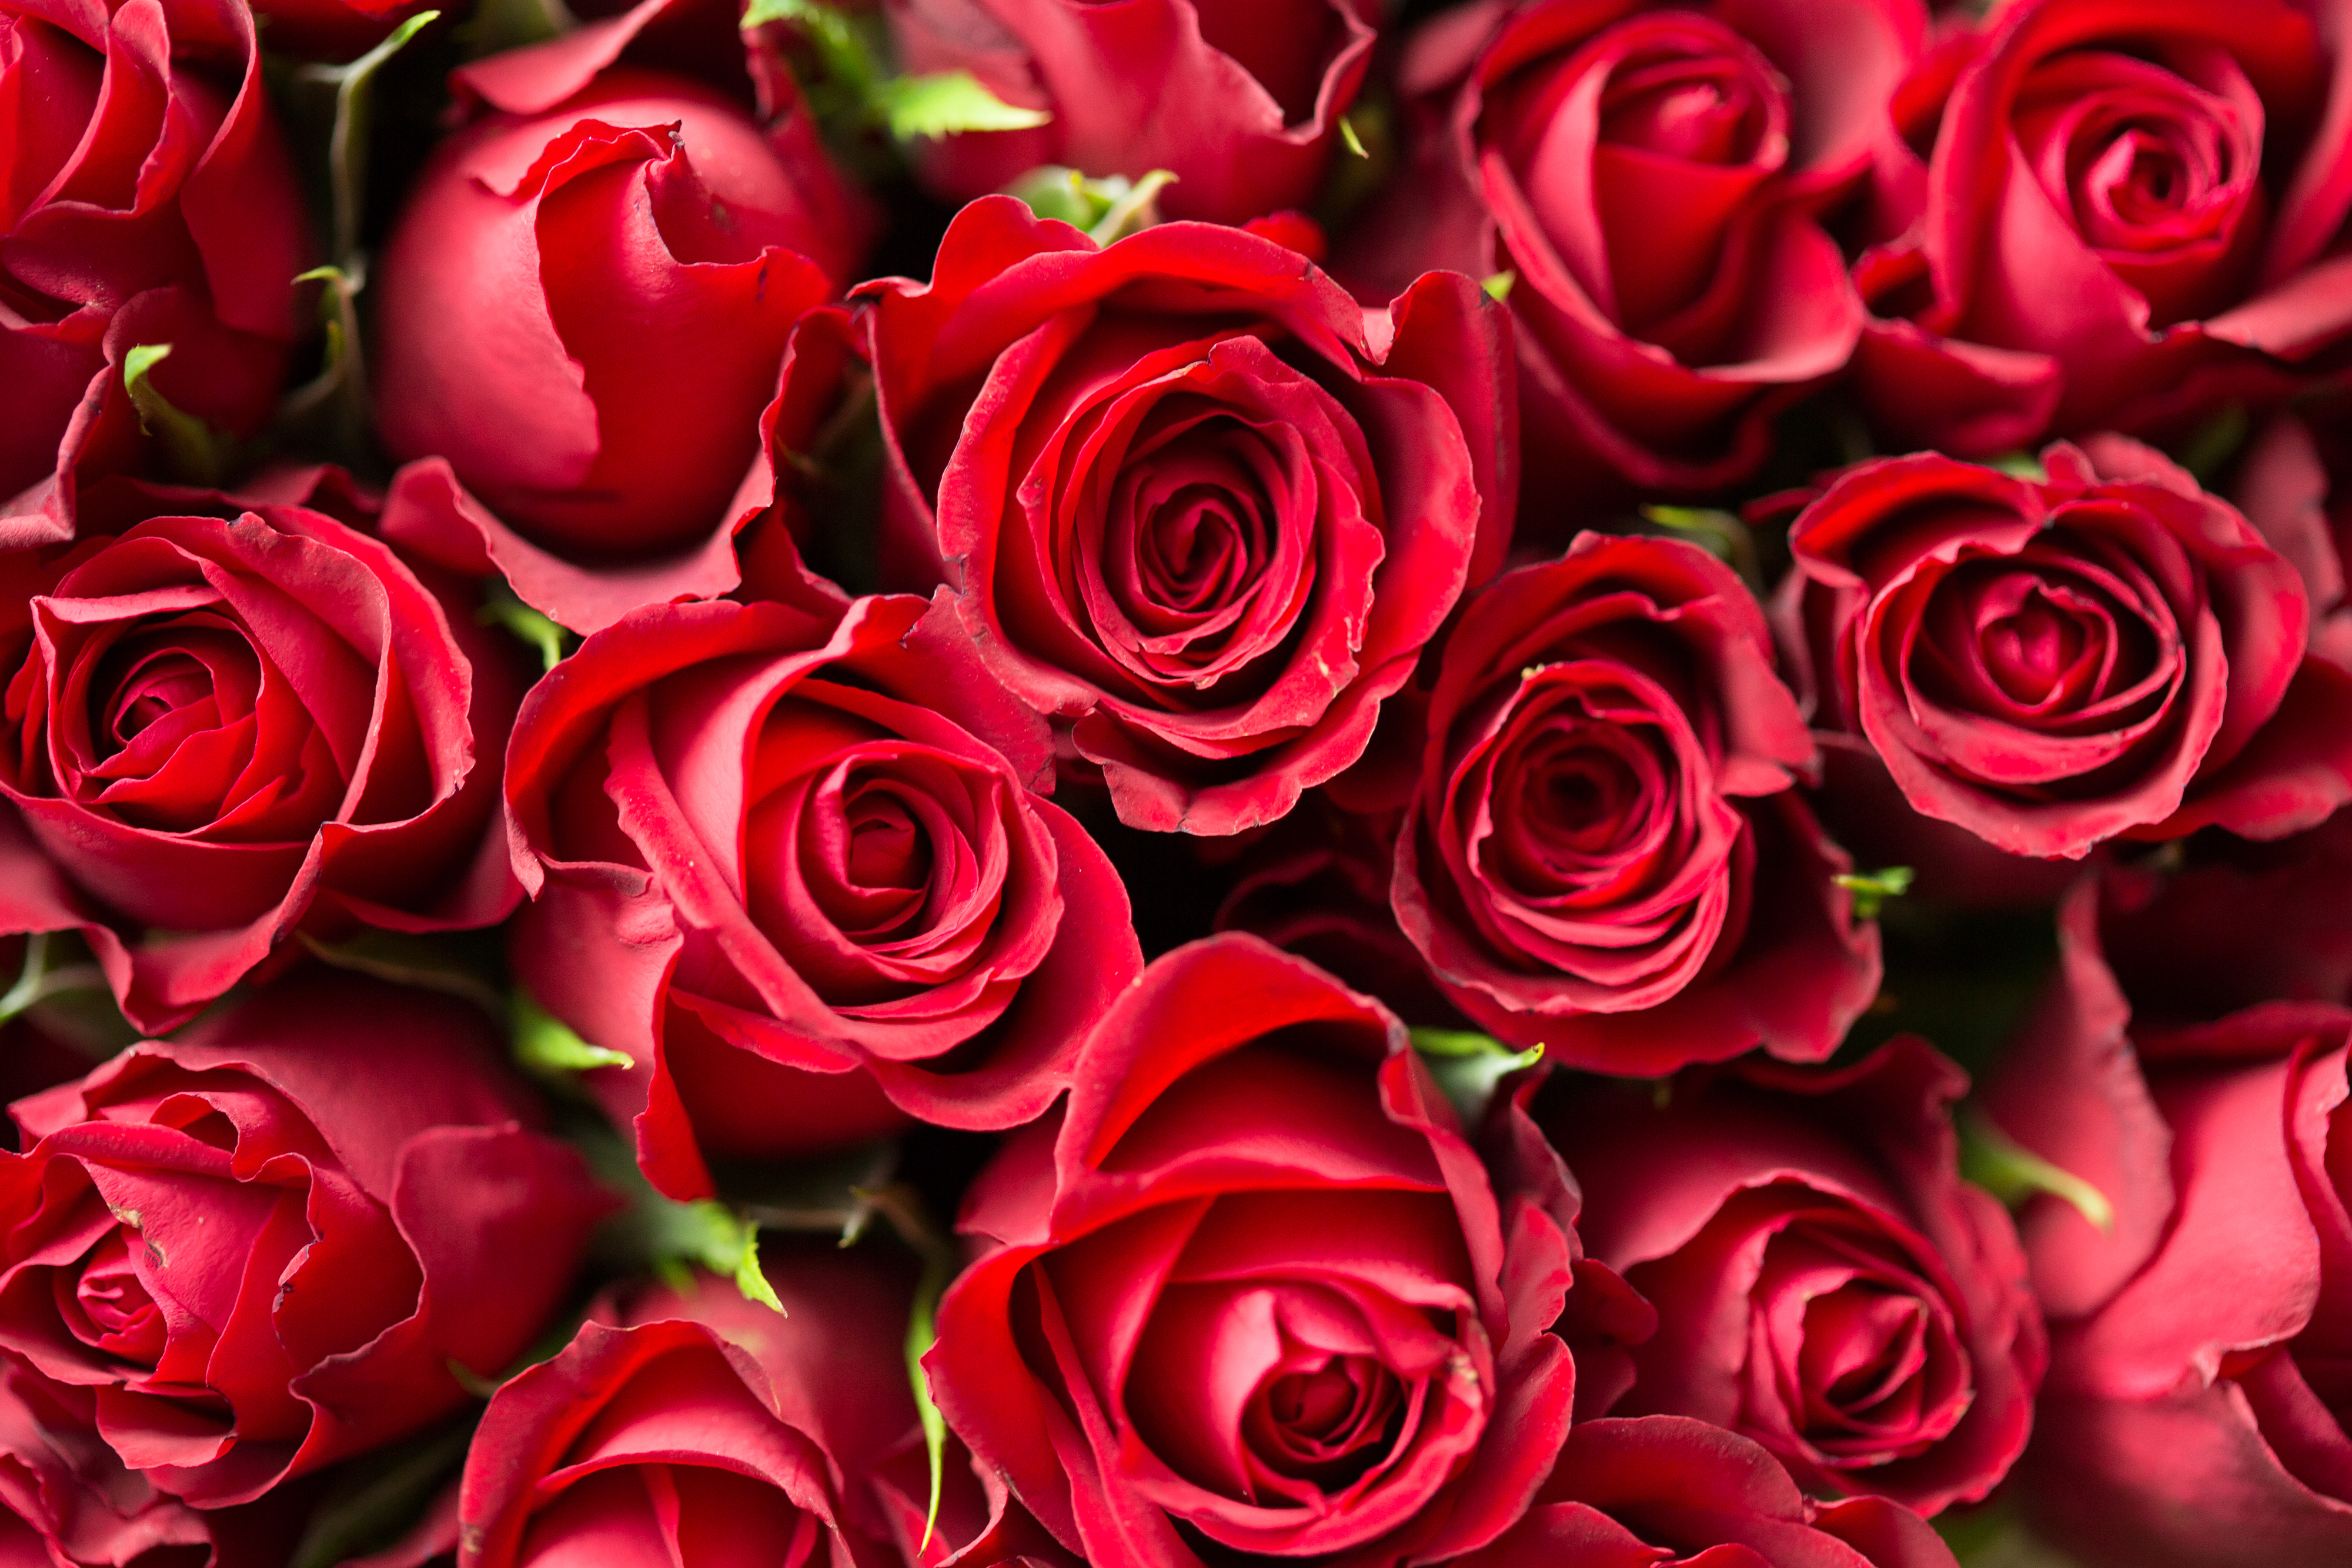 Valentine's Day Red Roses Close Up Free Stock Photo | picjumbo